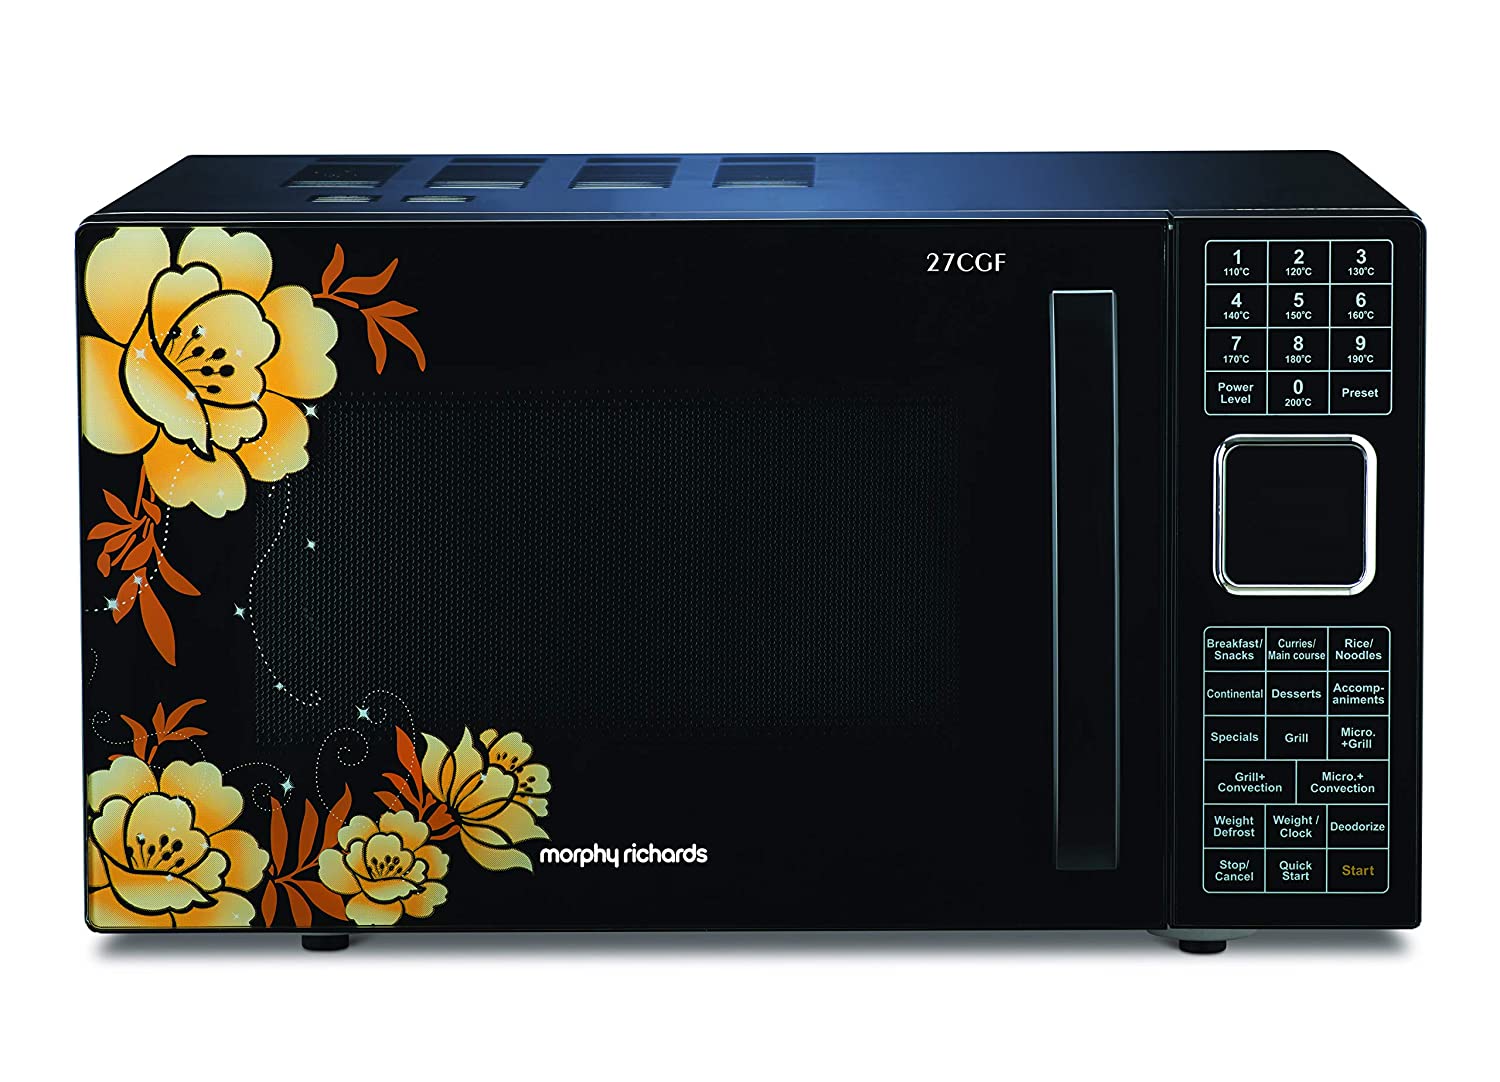 Morphy Richards 27 Ltr Floral Design Microwave Convection Oven 27CGF with 200 Autocook Menus, Black, Regular - Mahajan Electronics Online